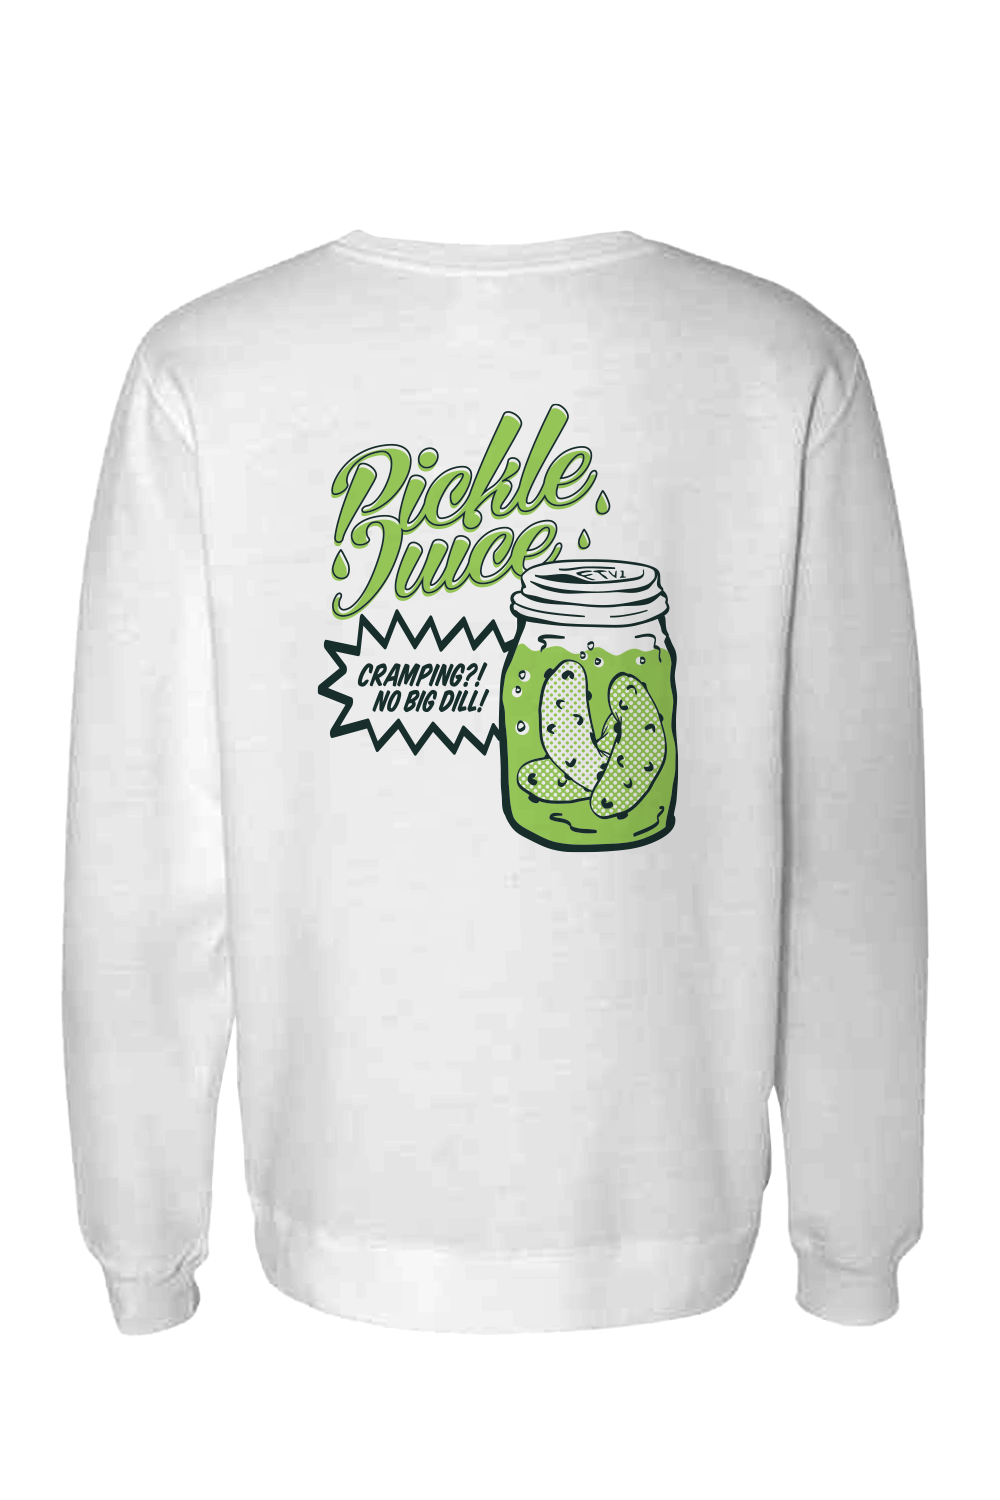 Pickle Juice Crewneck Sweatshirt (White)